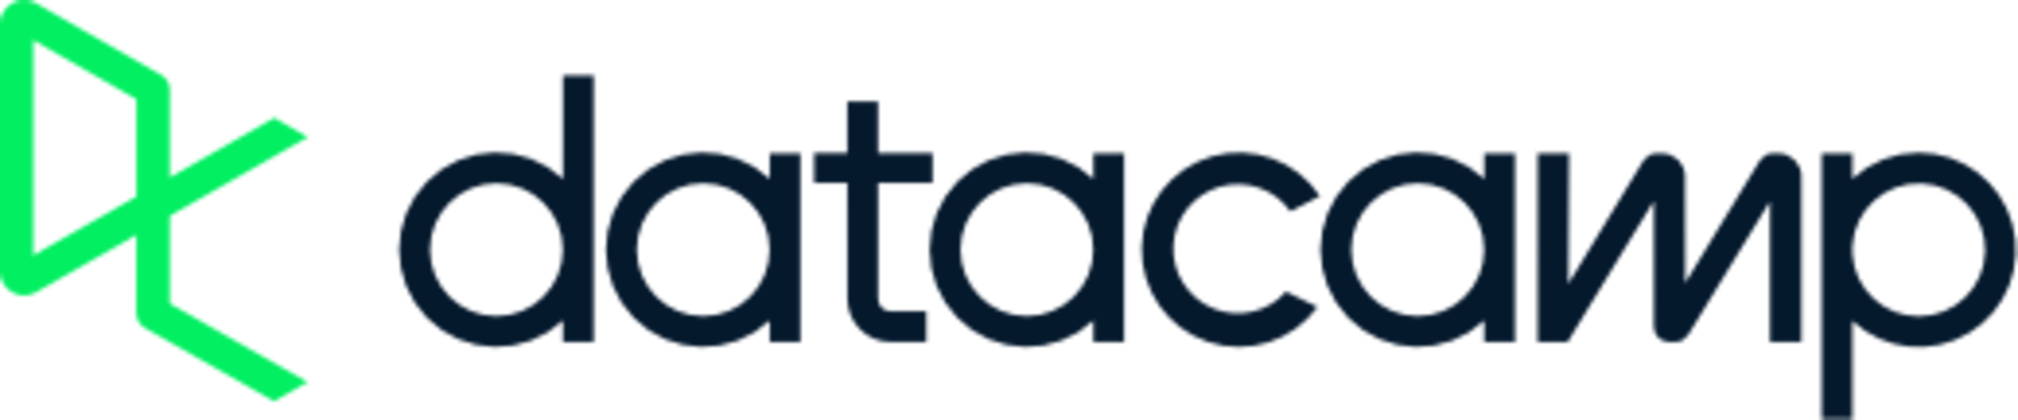 Datacamp Logo